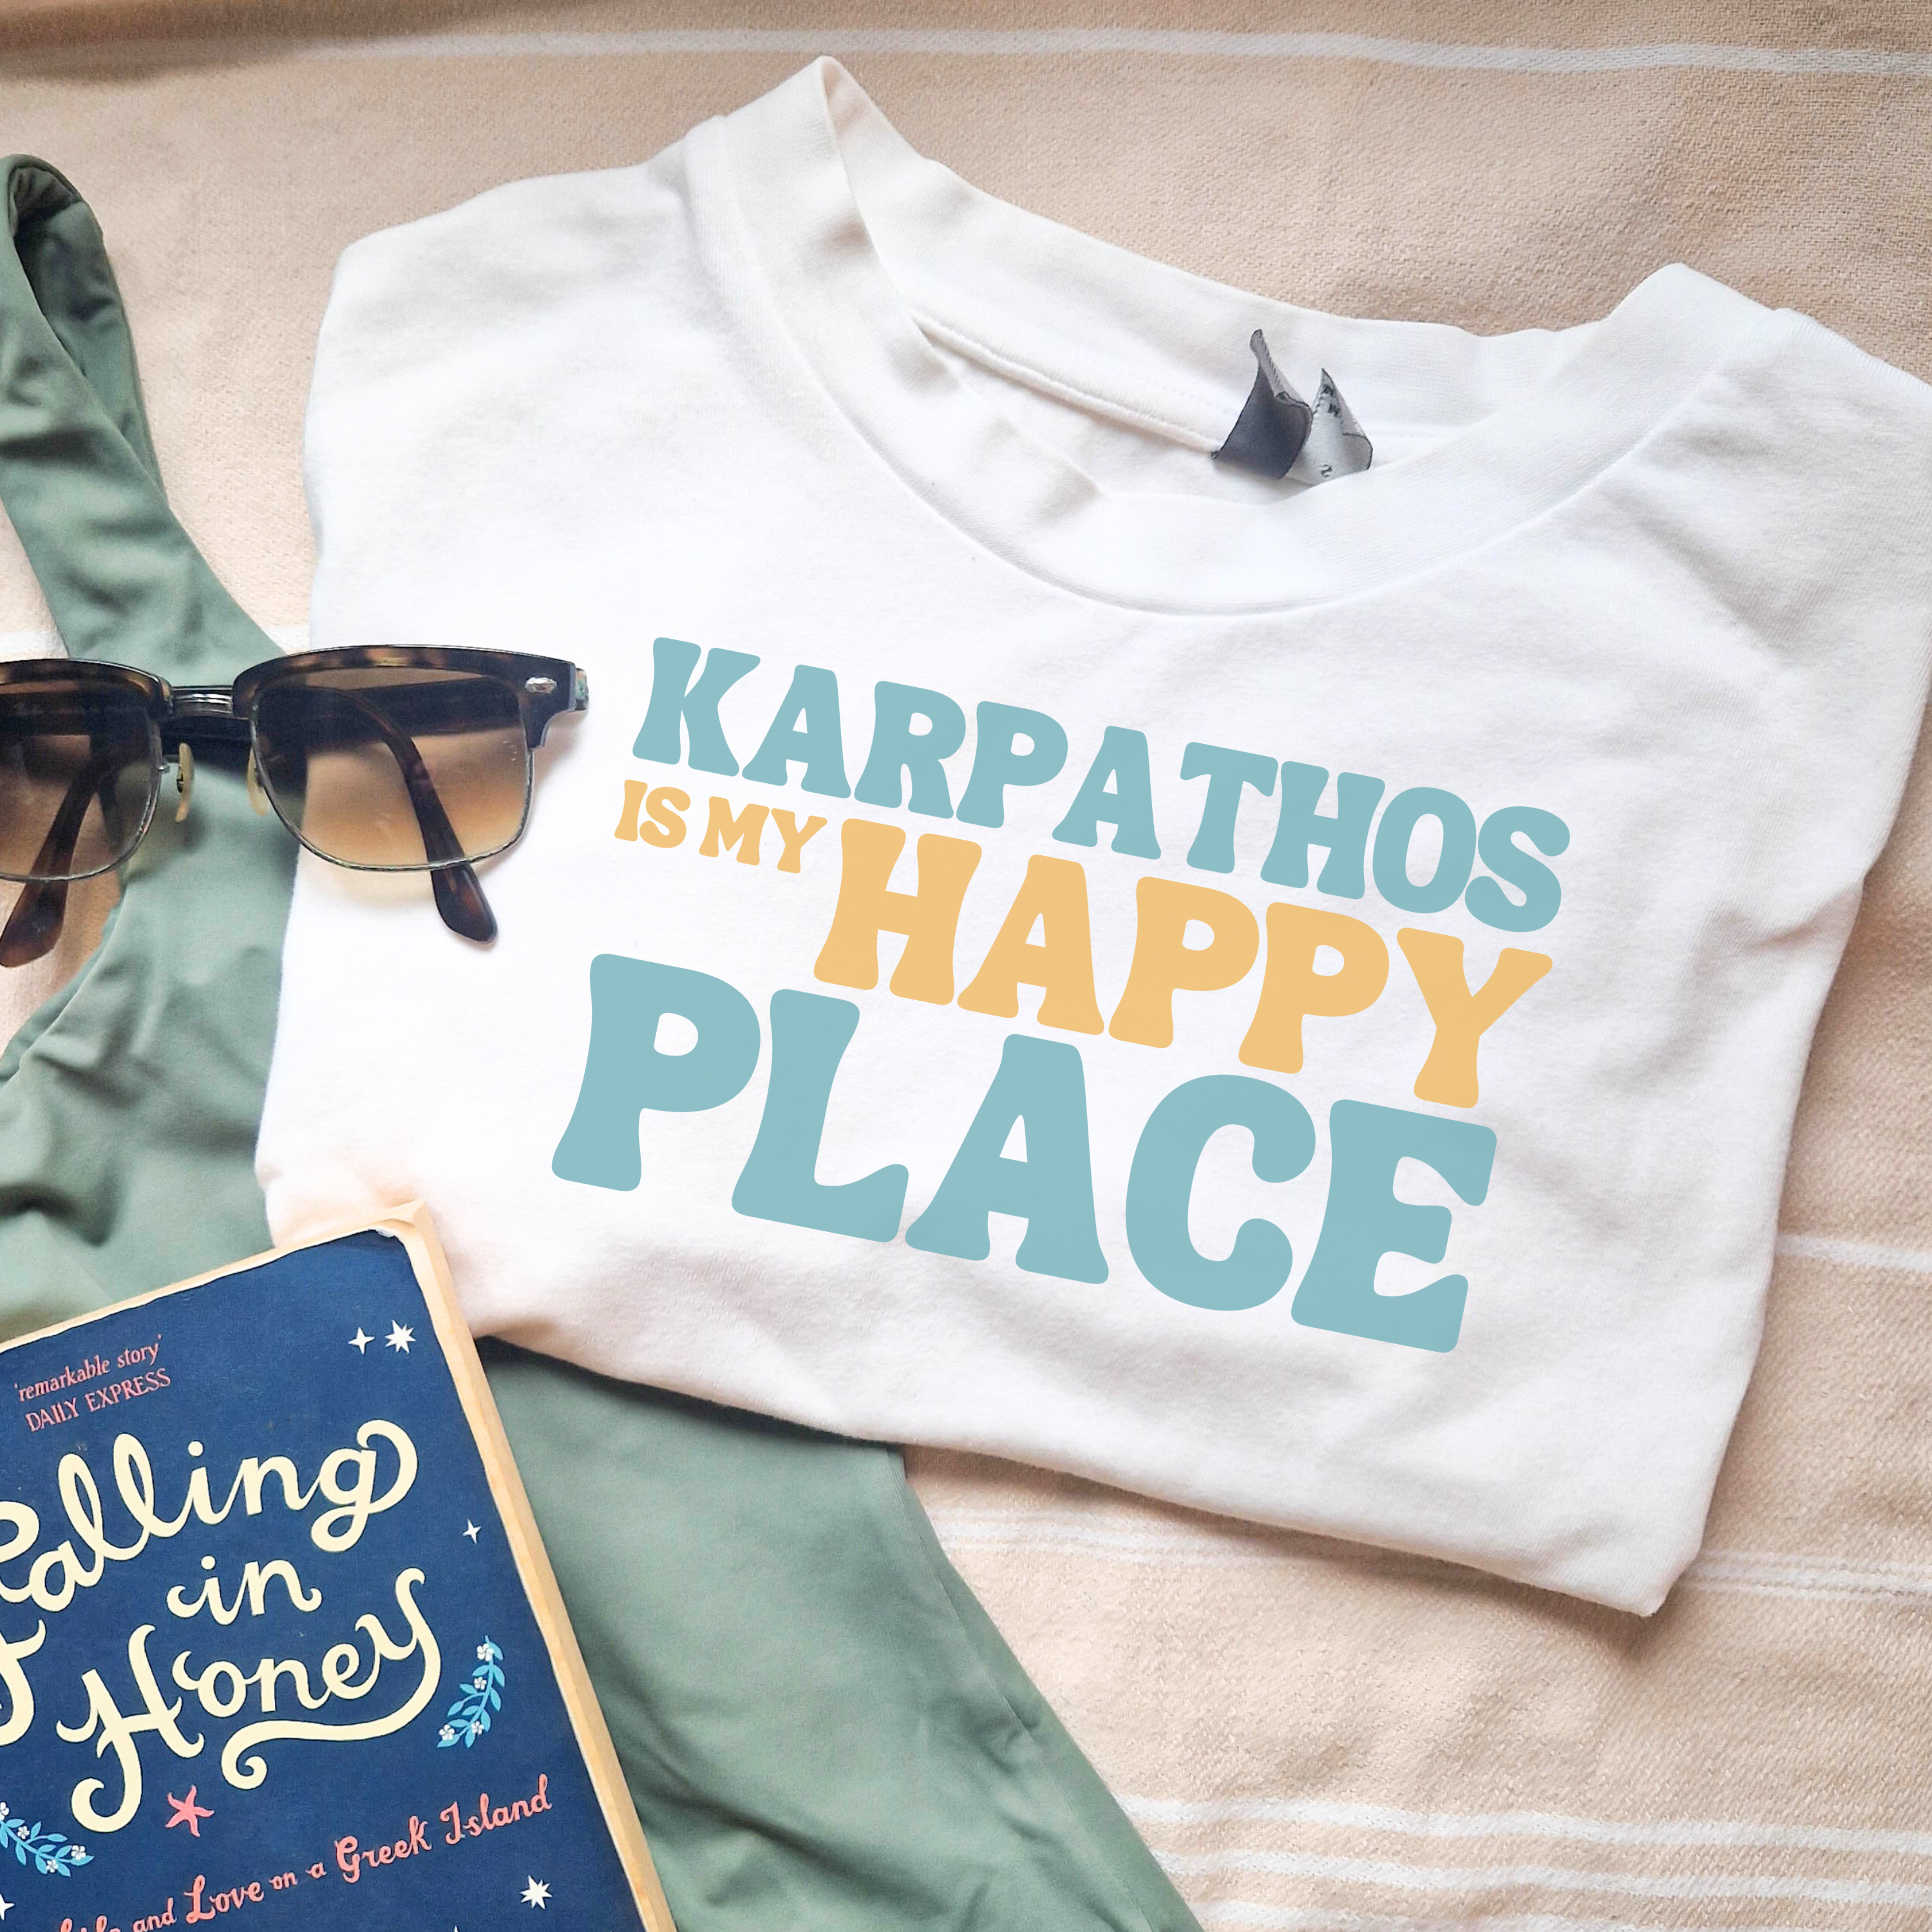 Karpathos is my happy place shirt